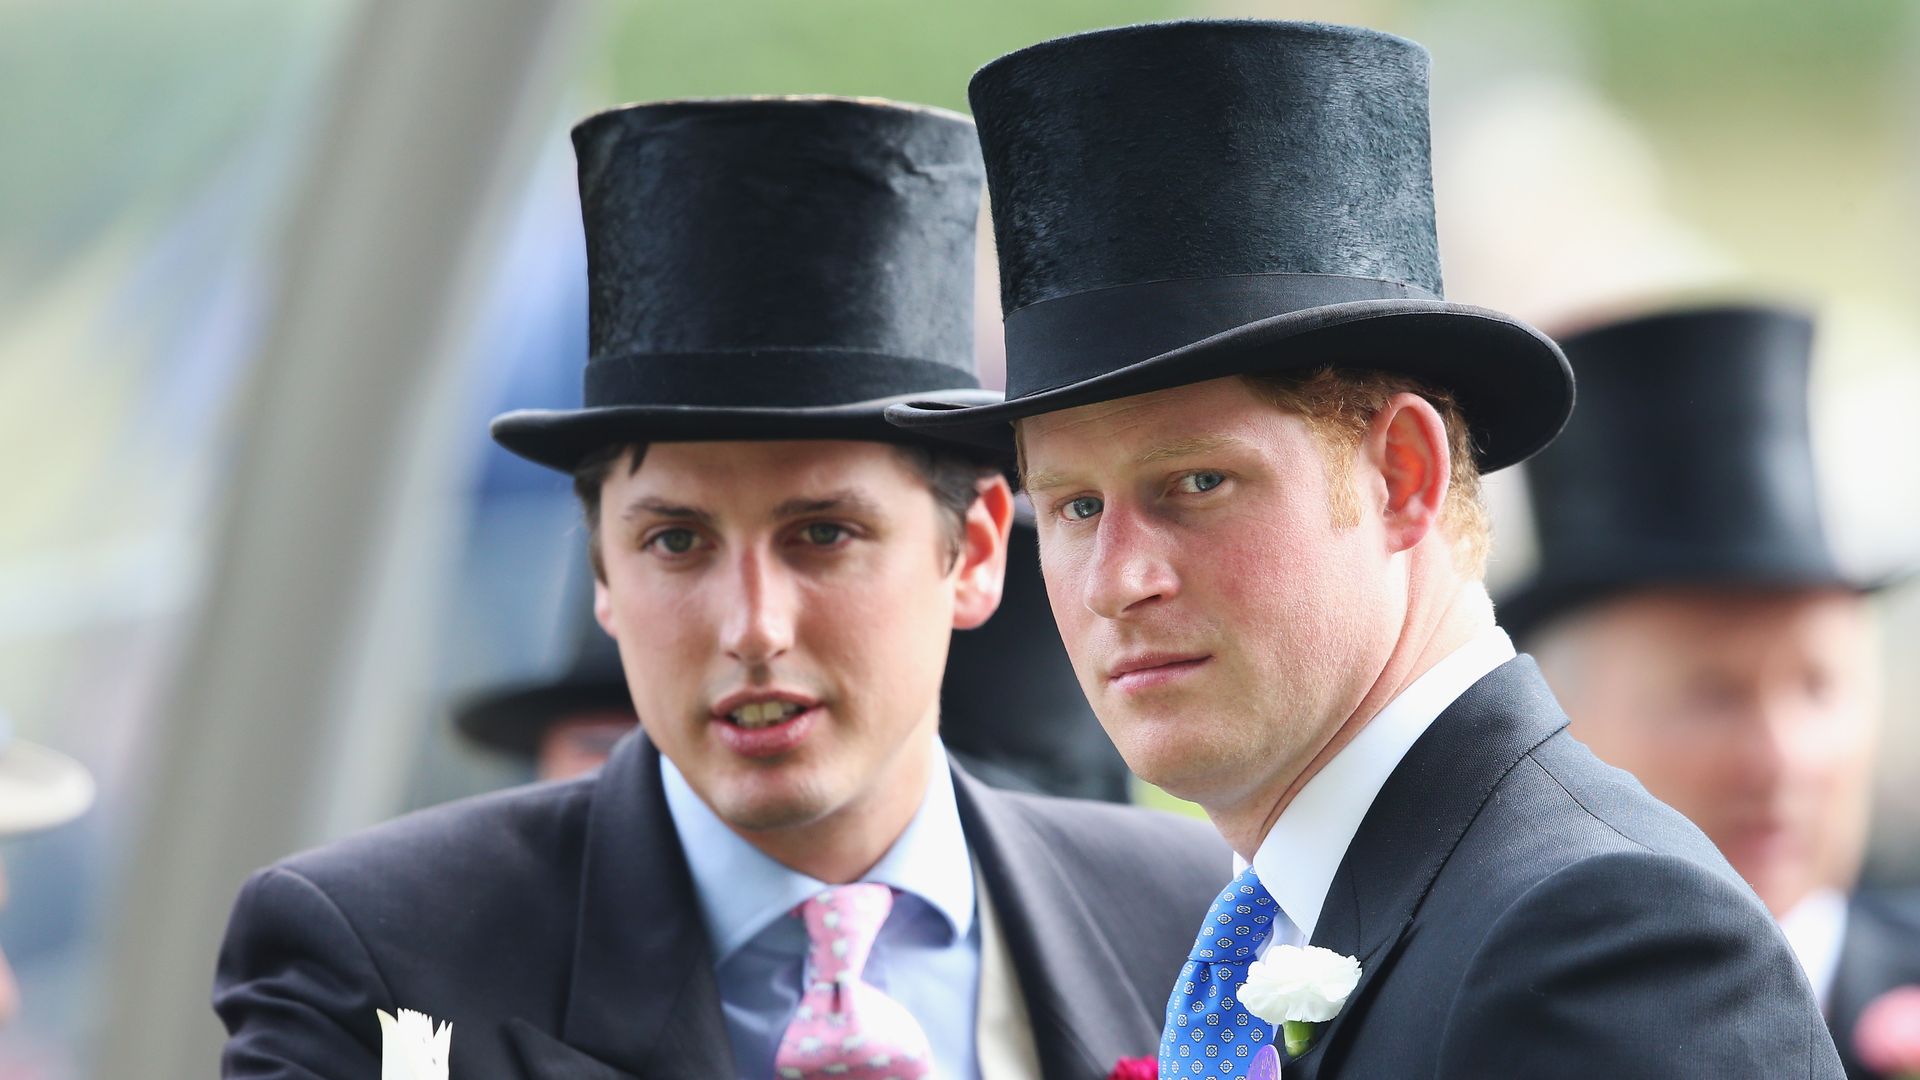 Jake Warren and Prince Harry at Royal Ascot